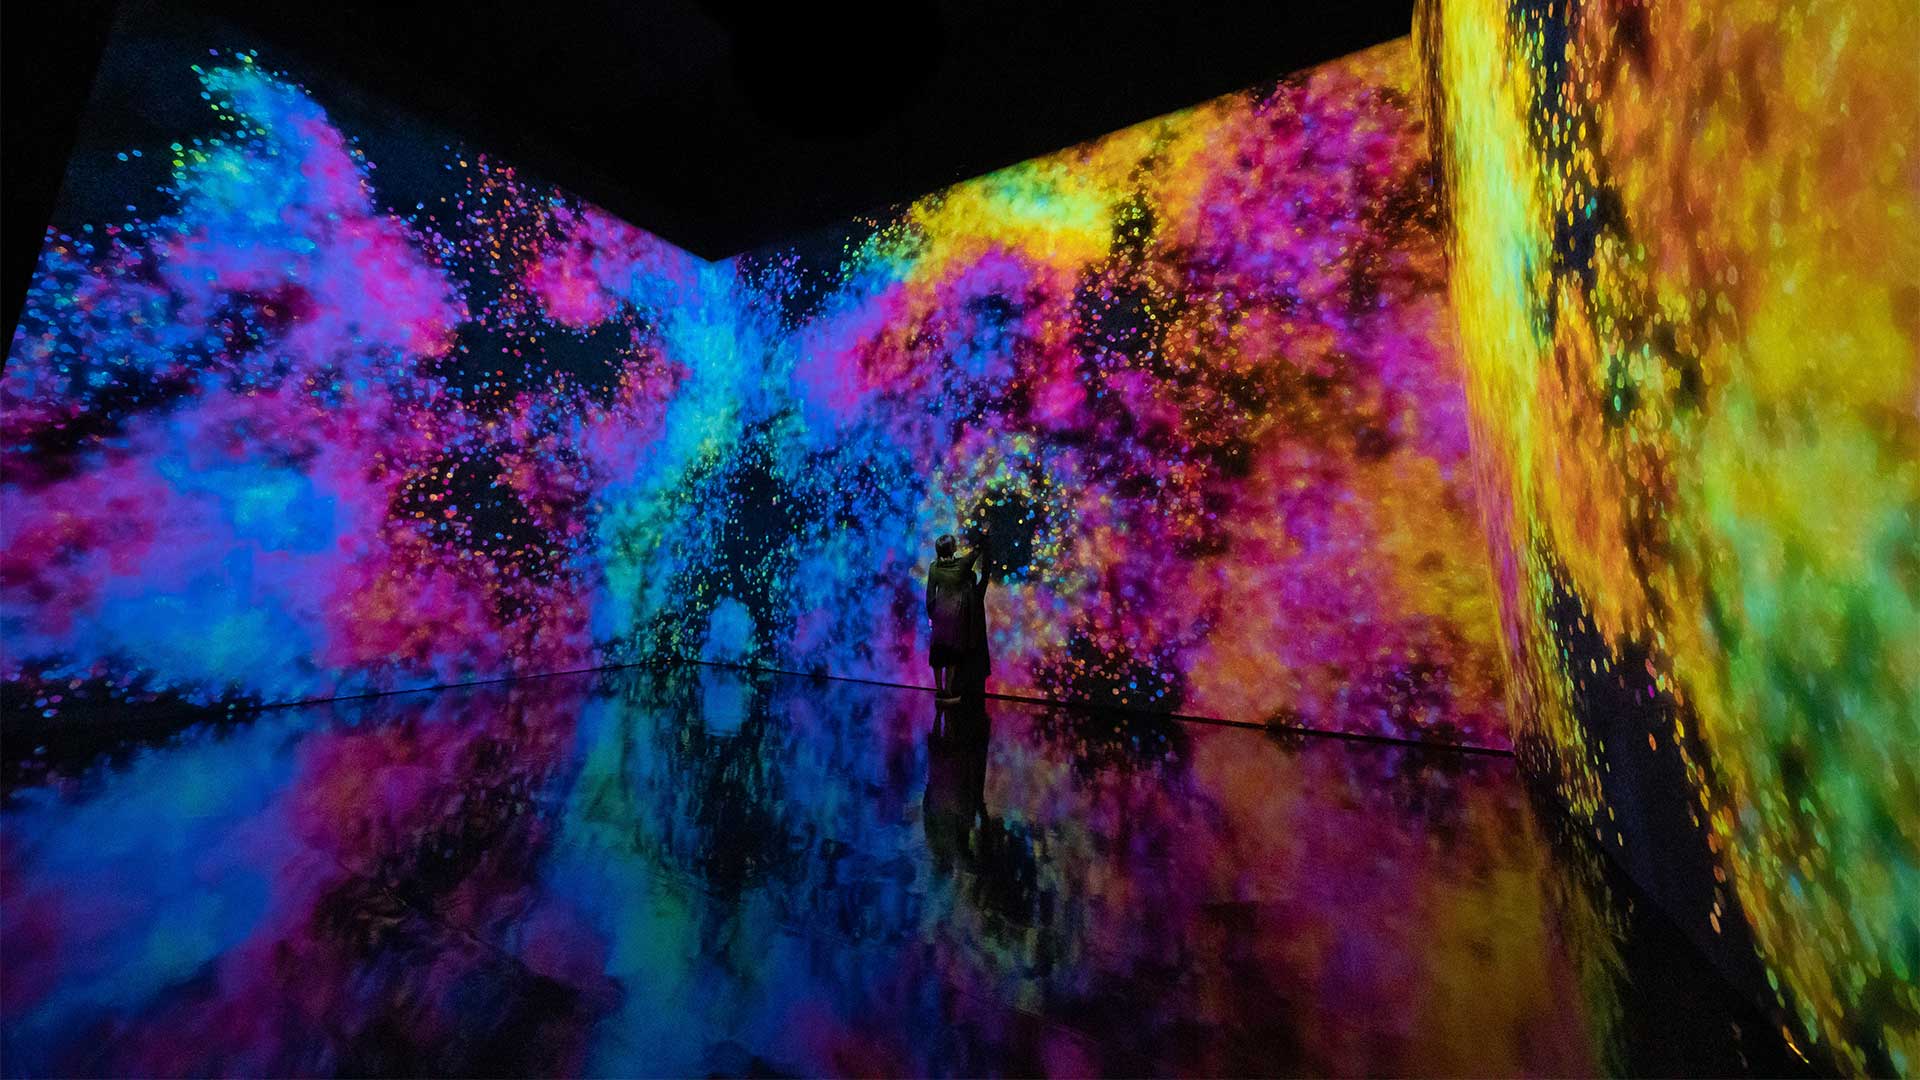 Immersive art installation at Future World, ArtScience Museum in Singapore